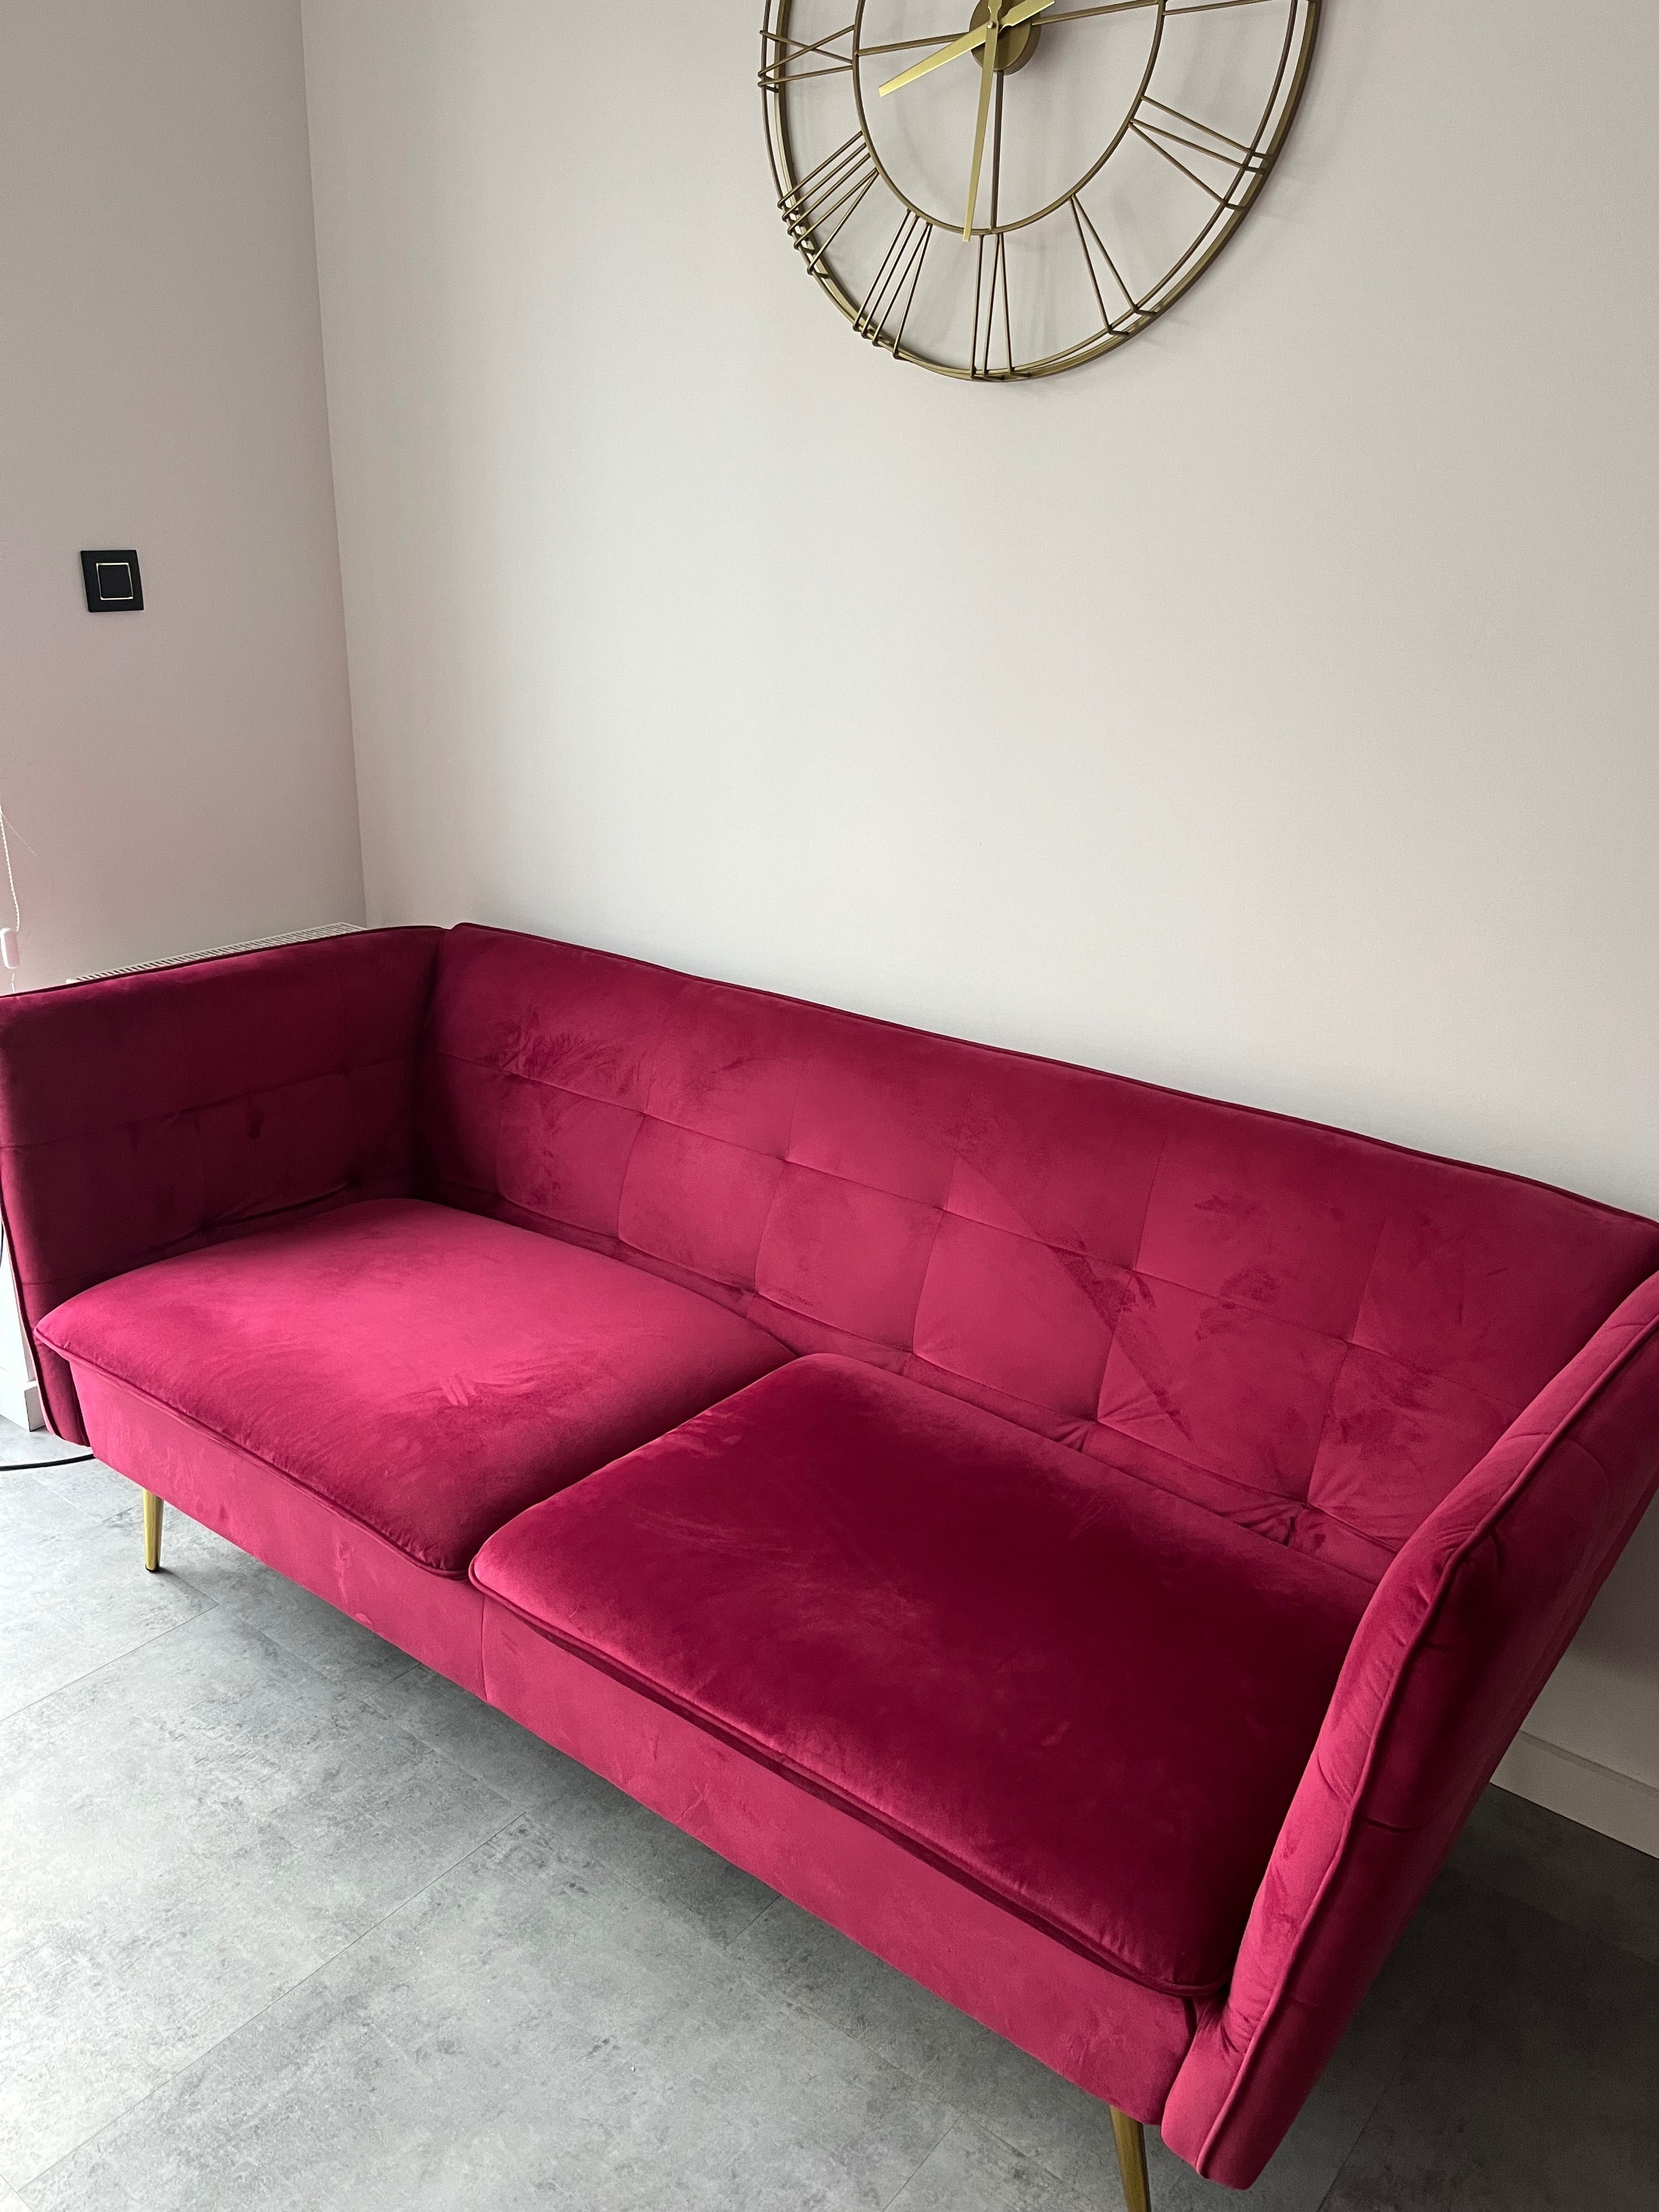 Sofa 3-osobowa welurowa bordowa / burgundowa+ taboret